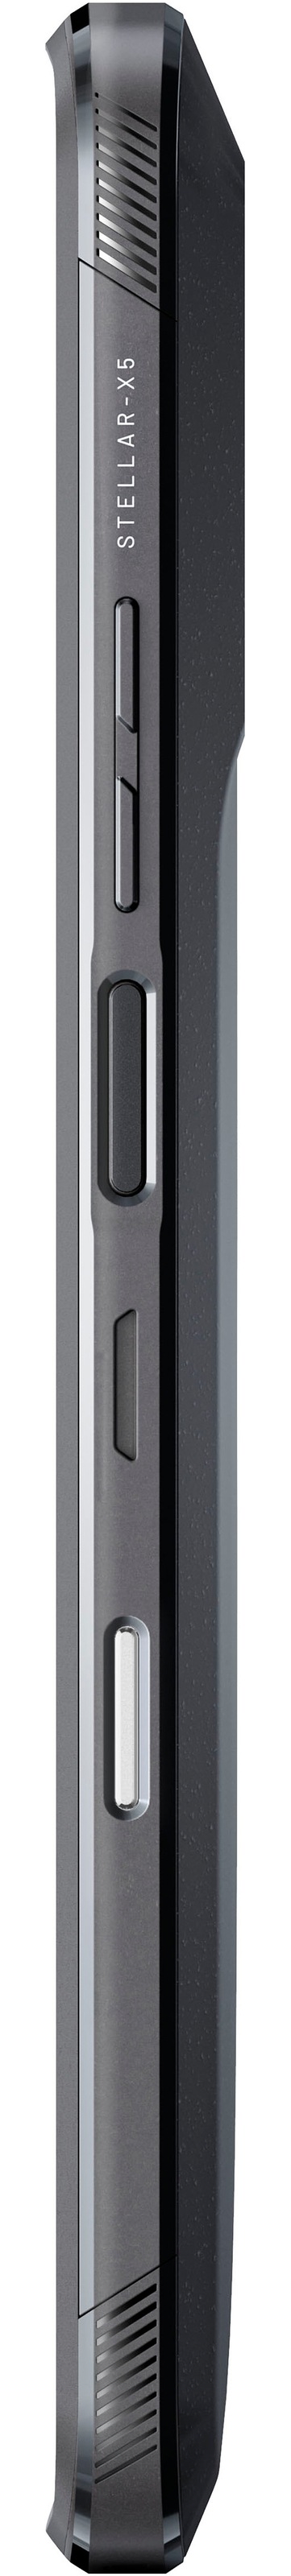 CROSSCALL Smartphone »Stellar-X5«, schwarz, 16,48 cm/6,49 Zoll, 128 GB Speicherplatz, 50 MP Kamera